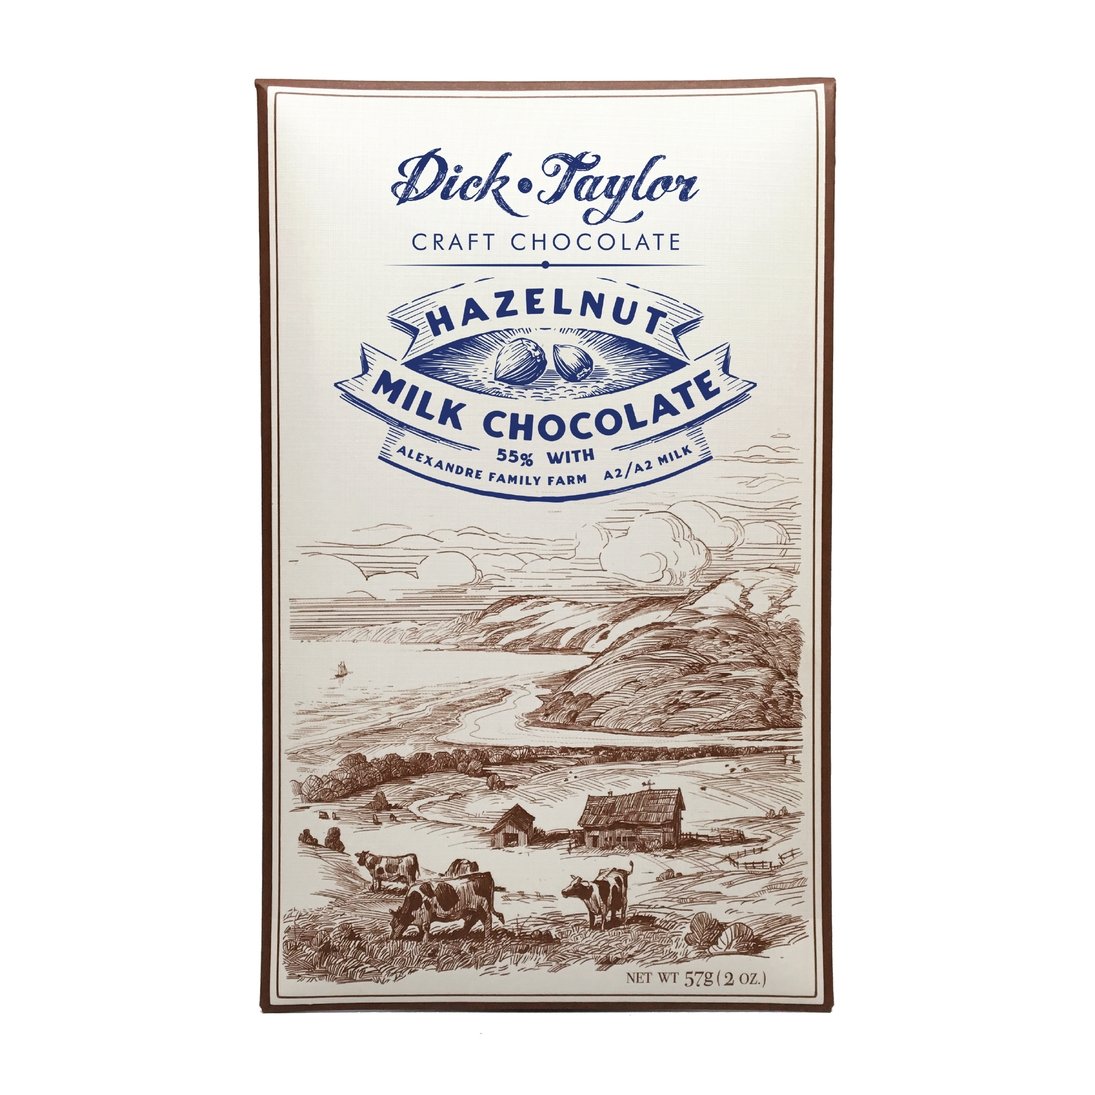 Dick Taylor Craft Chocolate - Hazelnut Milk Chocolate (2OZ / 55%) - The Epicurean Trader